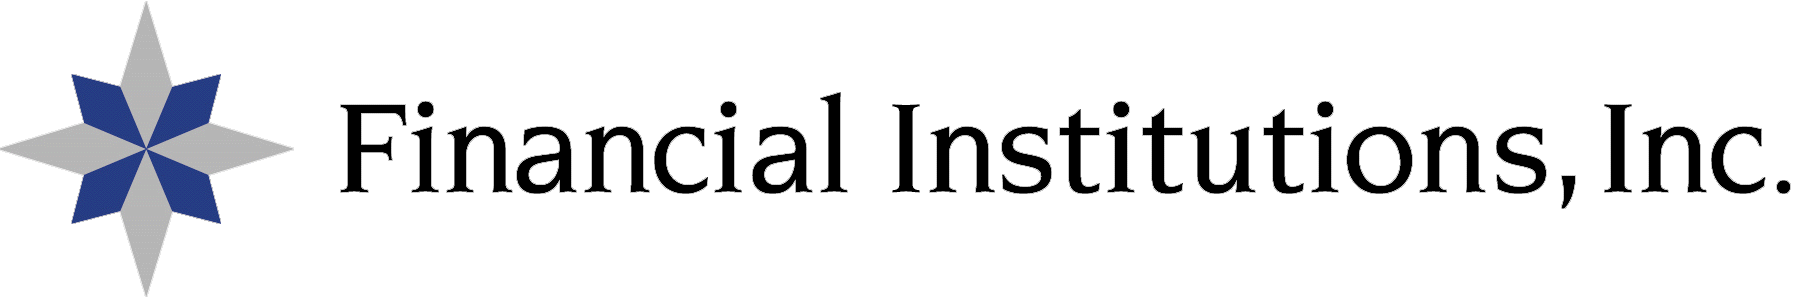 Financial Institutions, Inc. logo